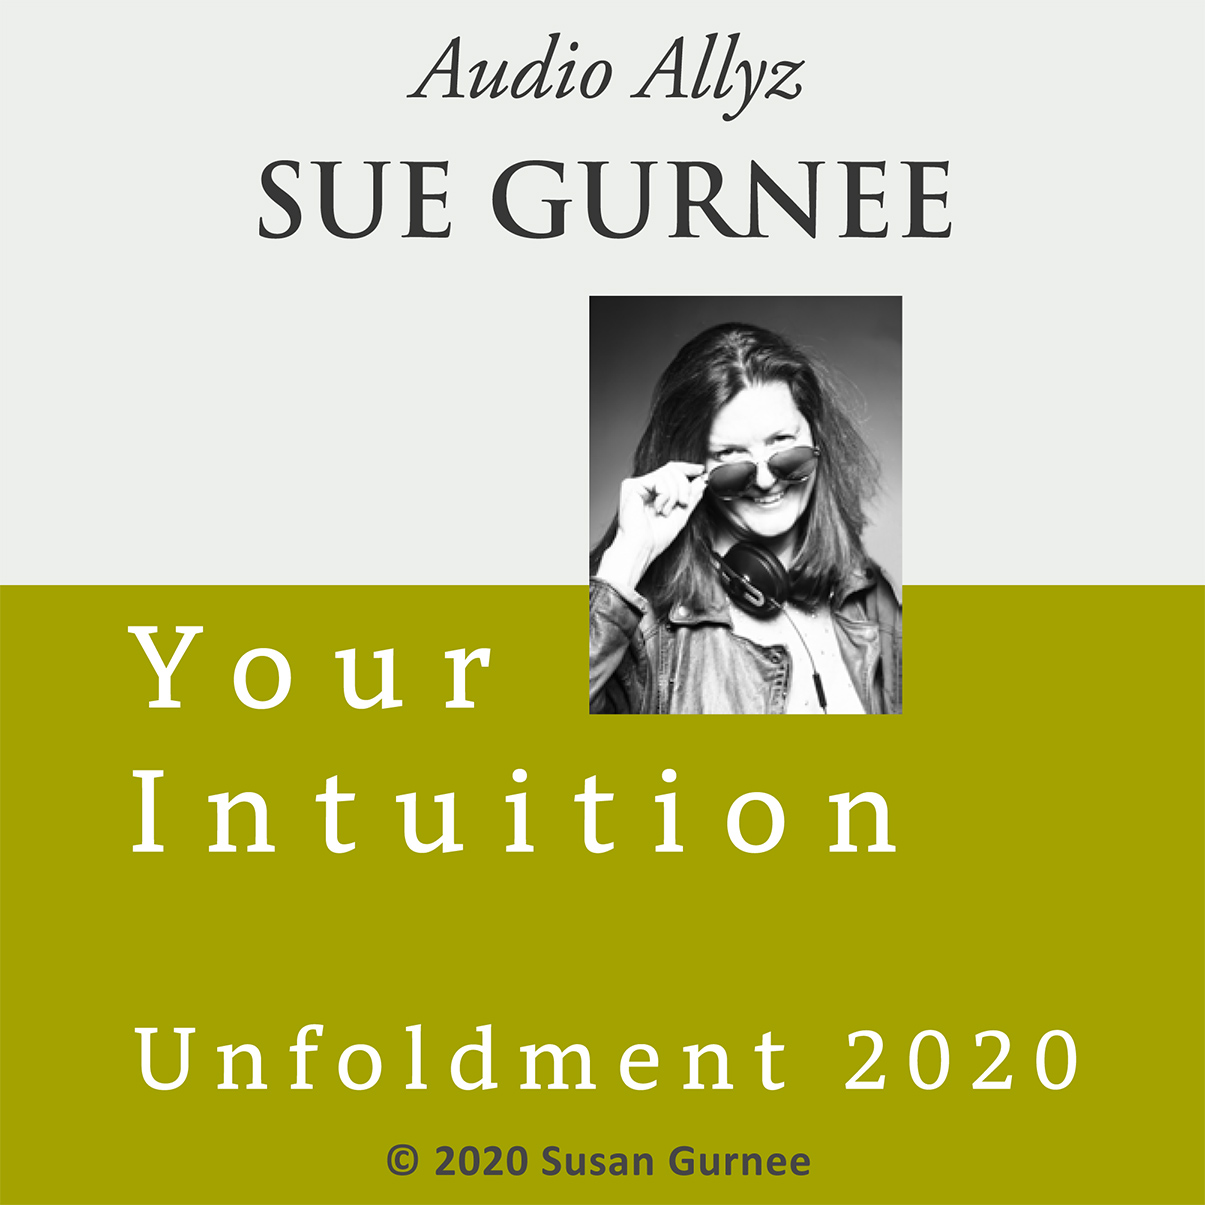 Audio Allyz Sue Gurnee - Unfoldment 2020 - Your Intuition